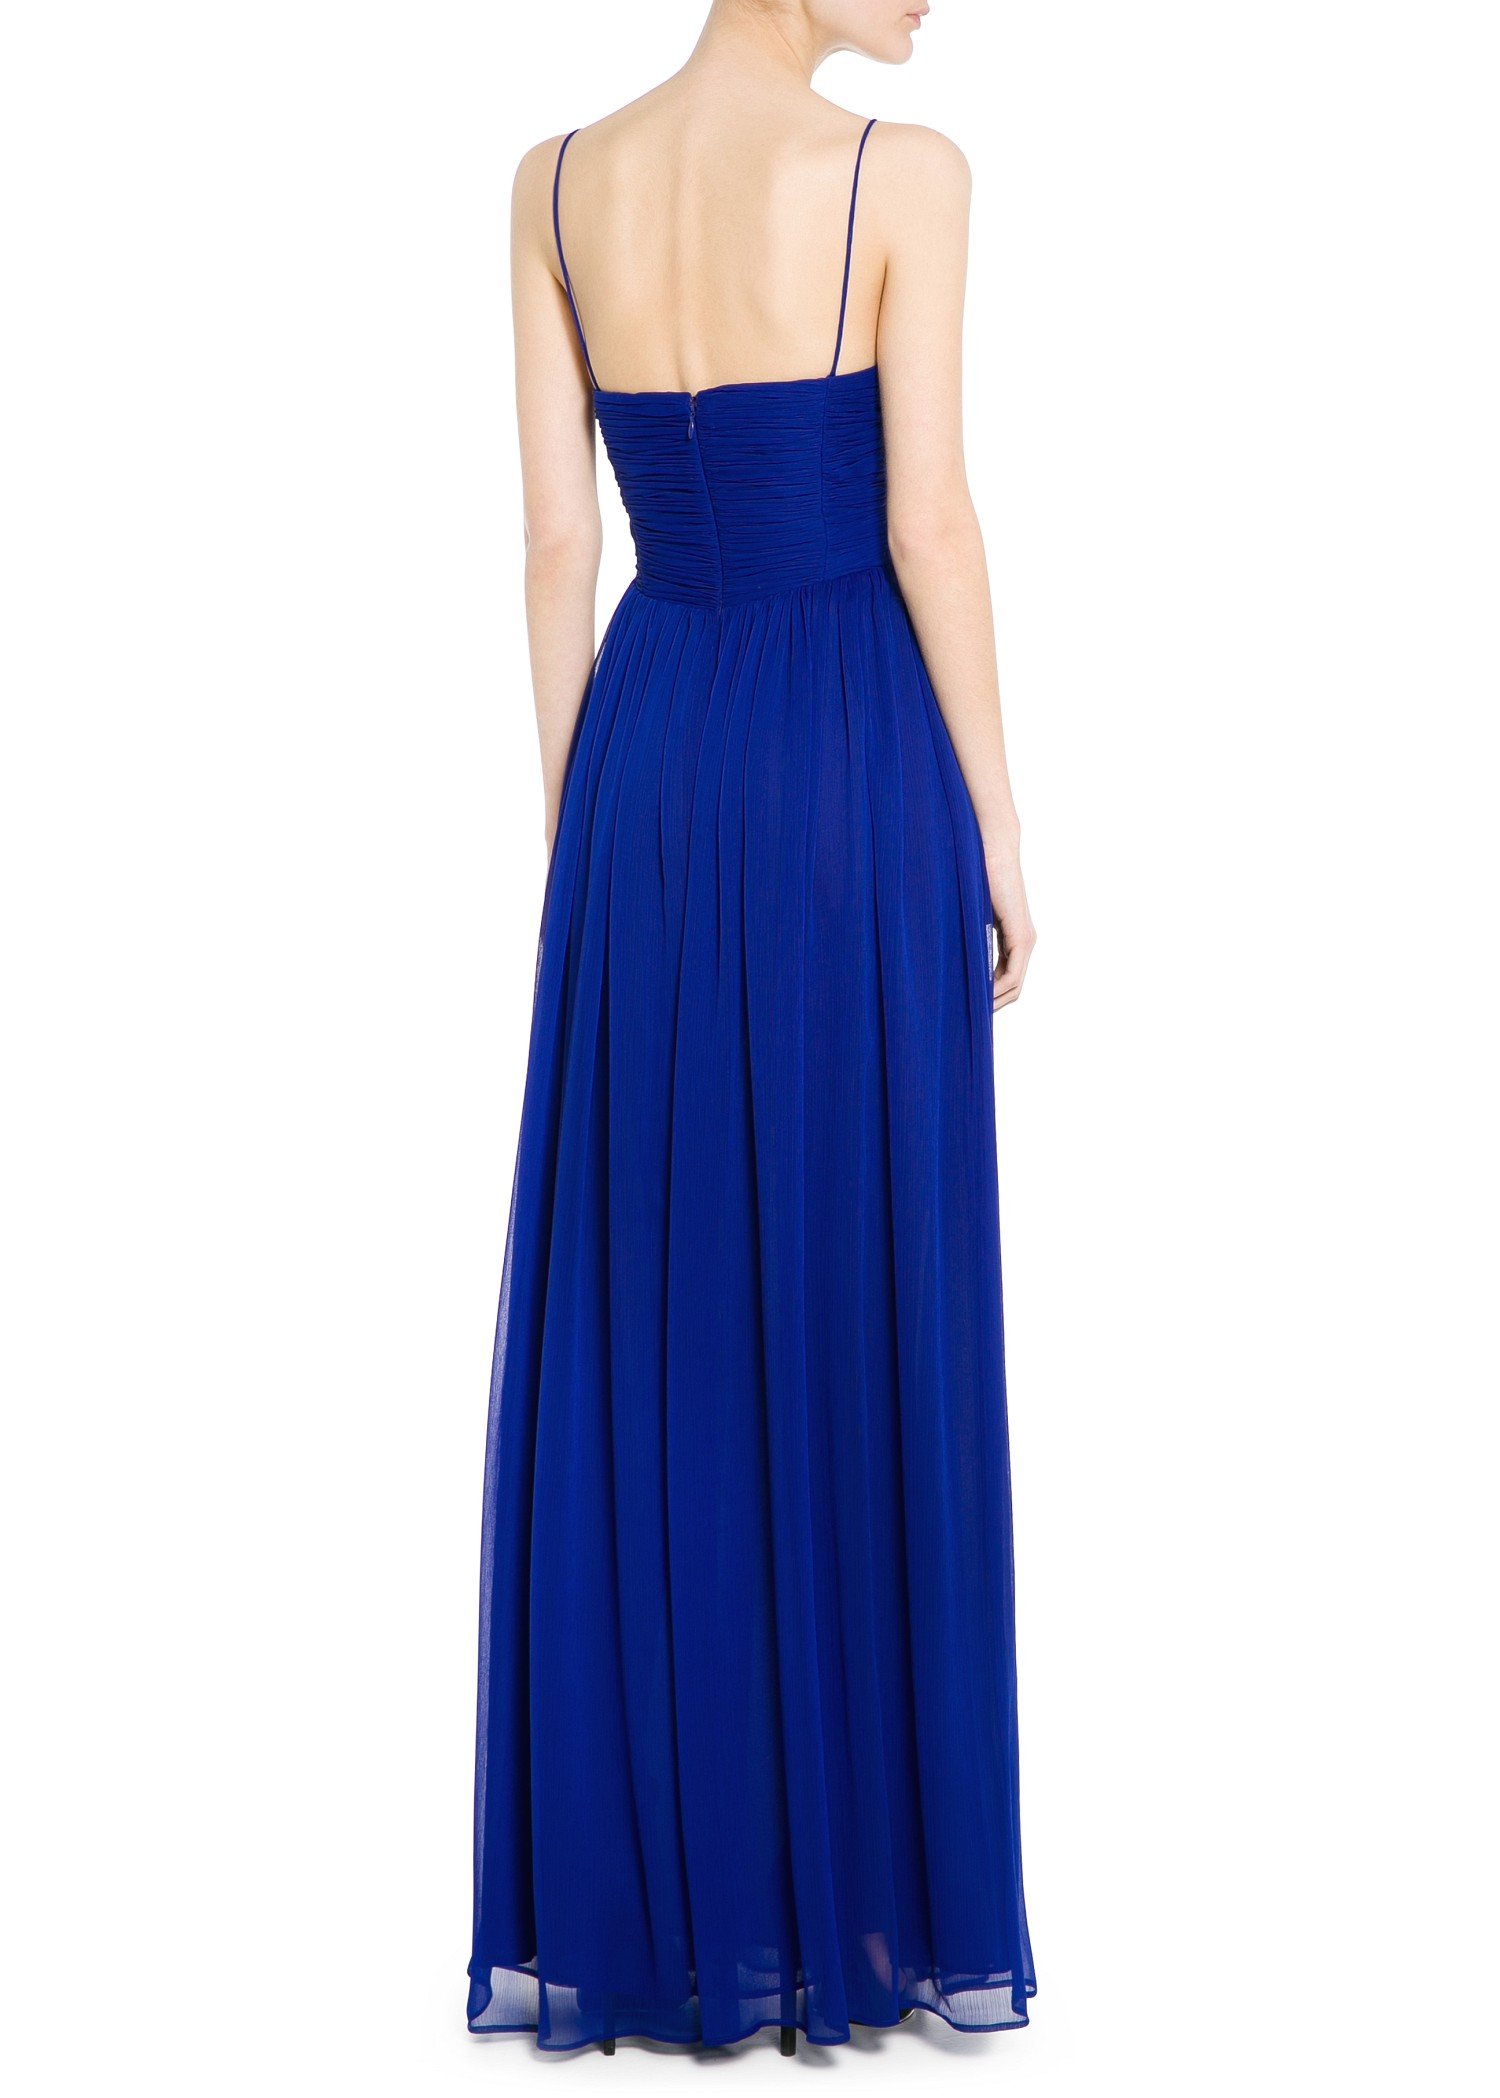 Lyst - Mango Draped Neckline Gown in Blue